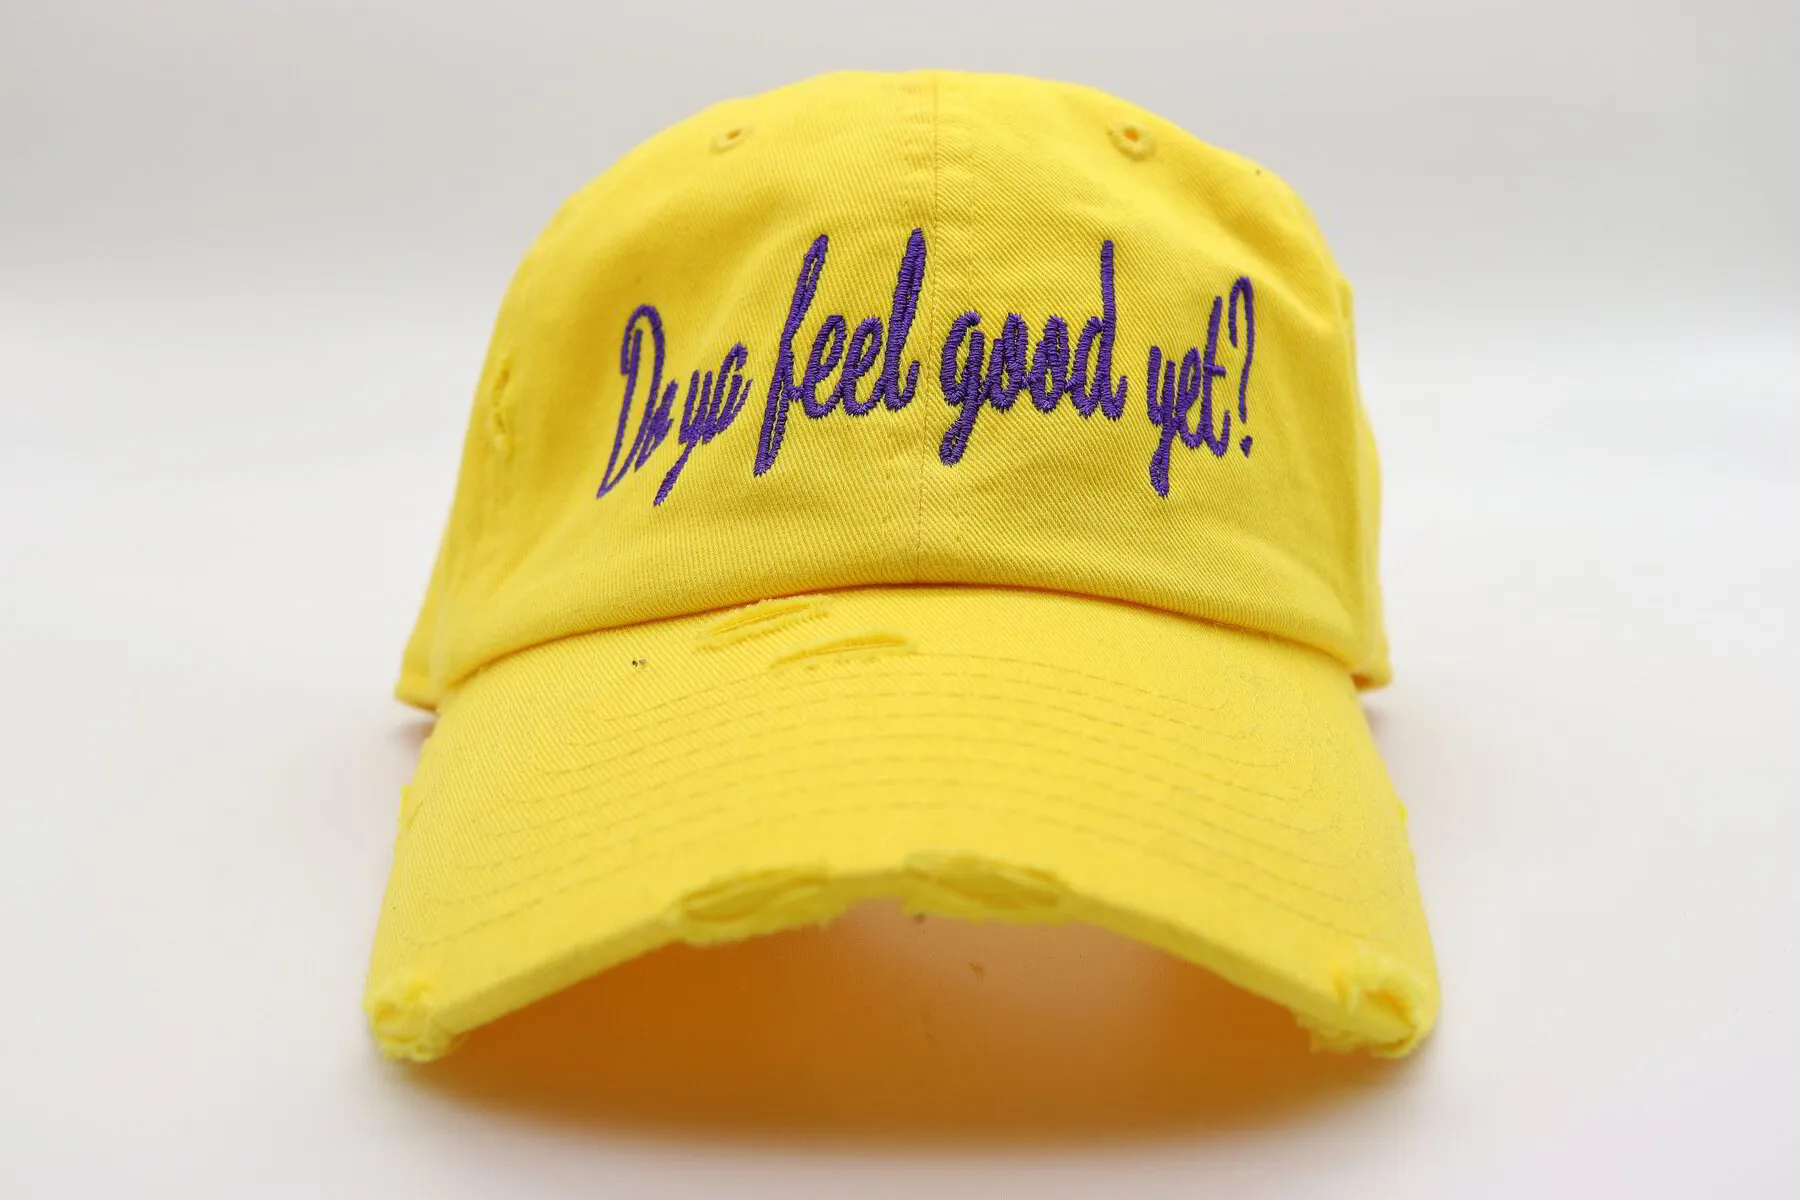 Yellow & Purple “Do Ya Feel Good Yet?” Dad hat.